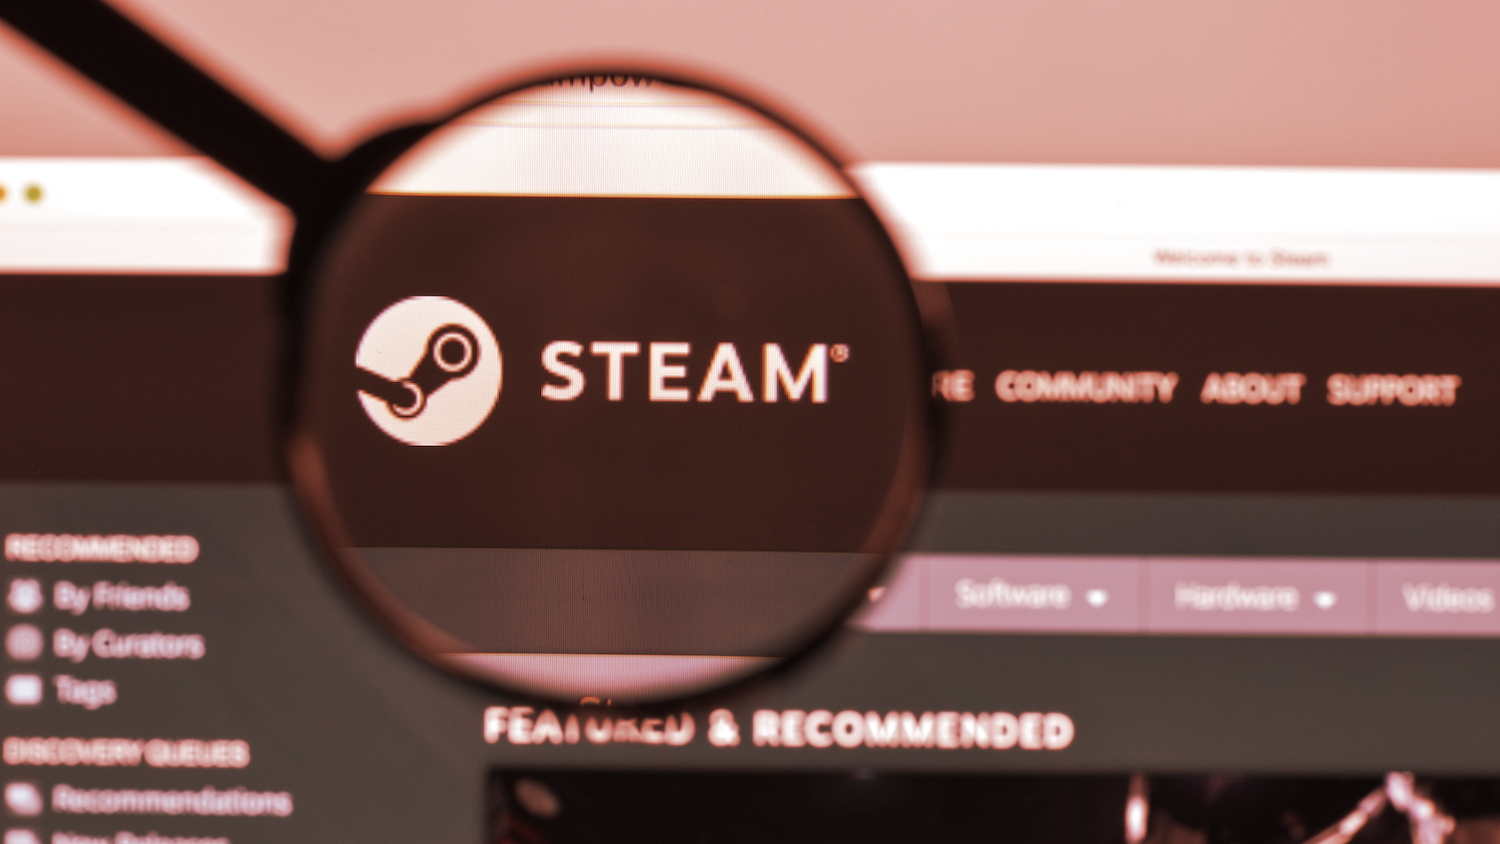 Crypto Advocates Protest ‘Gatekeeper’ Valve’s NFT Game Ban on Steam